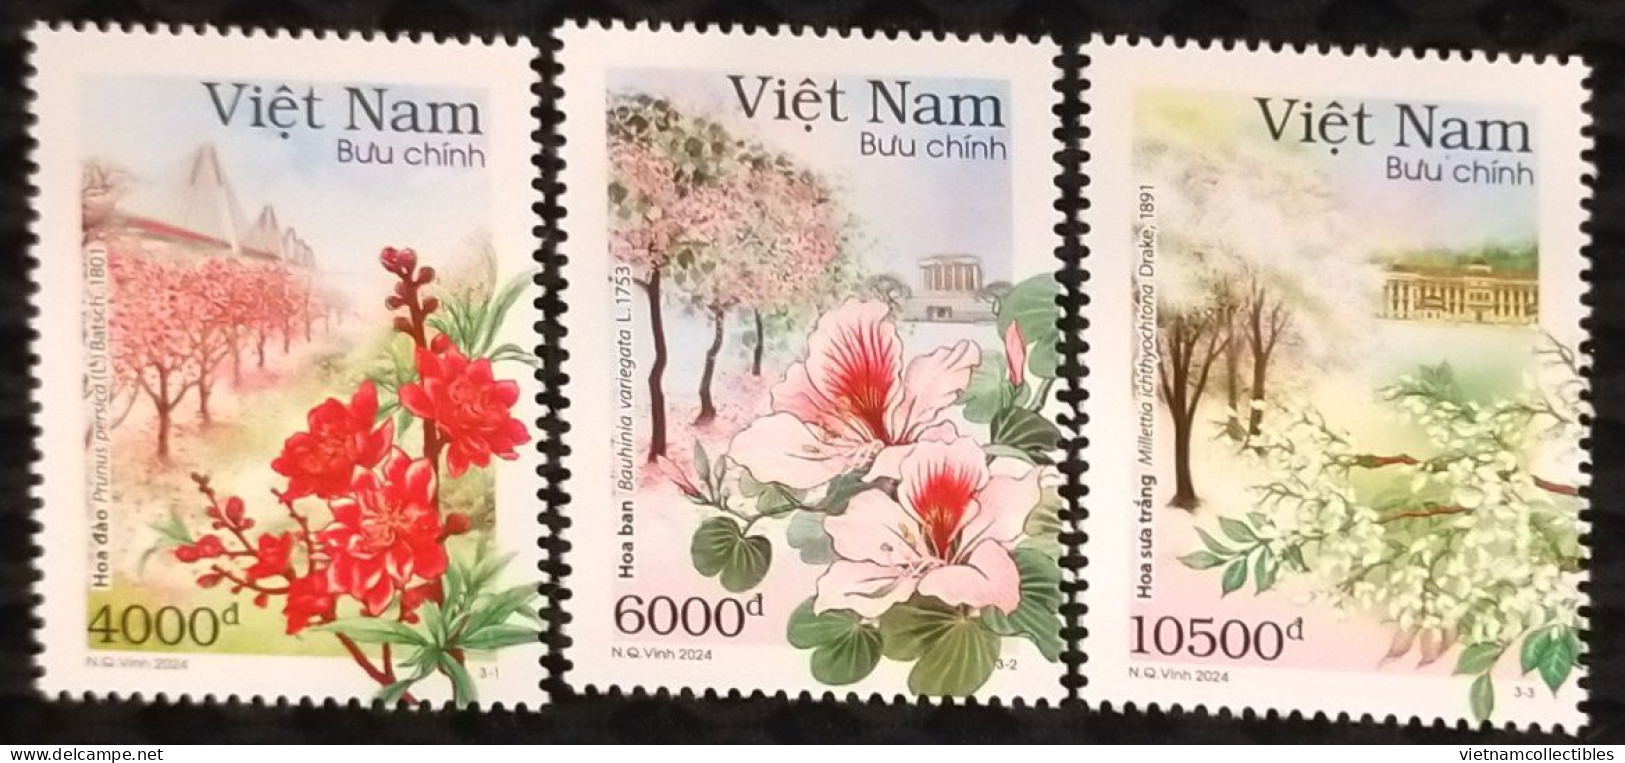 Set Of 03 Viet Nam Vietnam MNH Perf Stamps Issued On Apr 26, 2024 : 12 Flower Seasons In Hanoi (series 1) (Ms1188)) - Vietnam